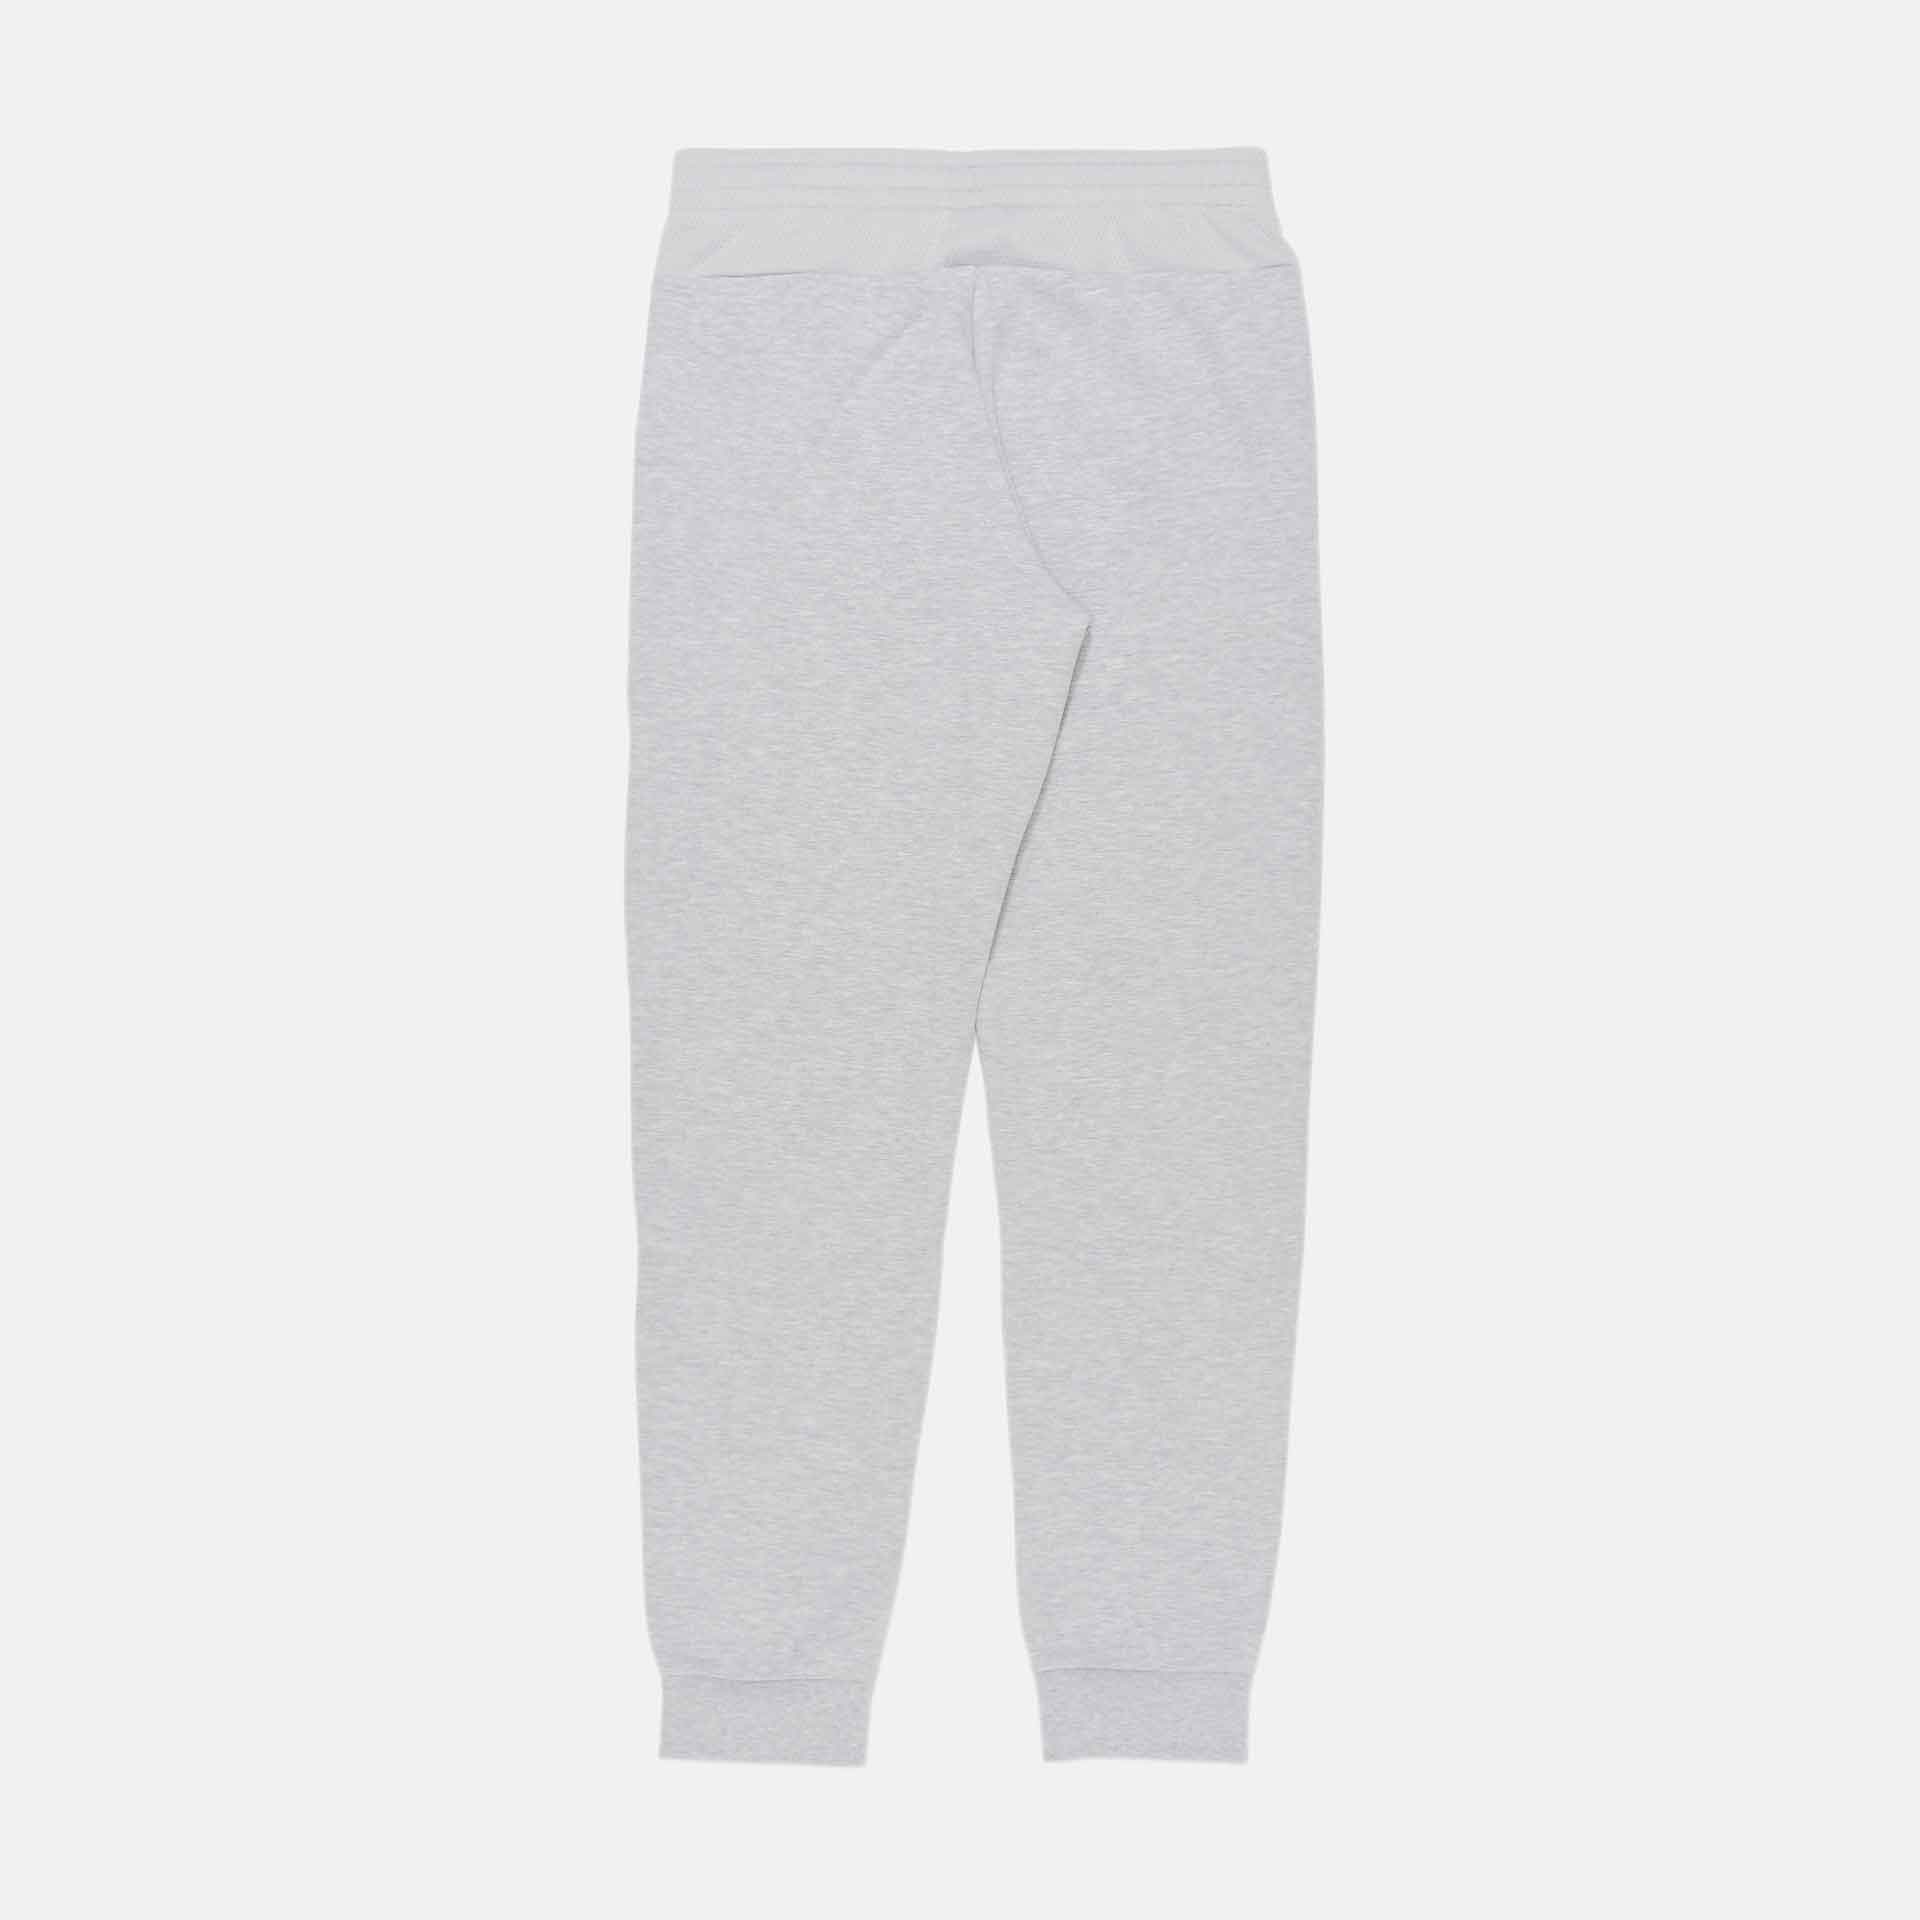 Lacoste Sweat Pants Silver Chine/Elephant Grey